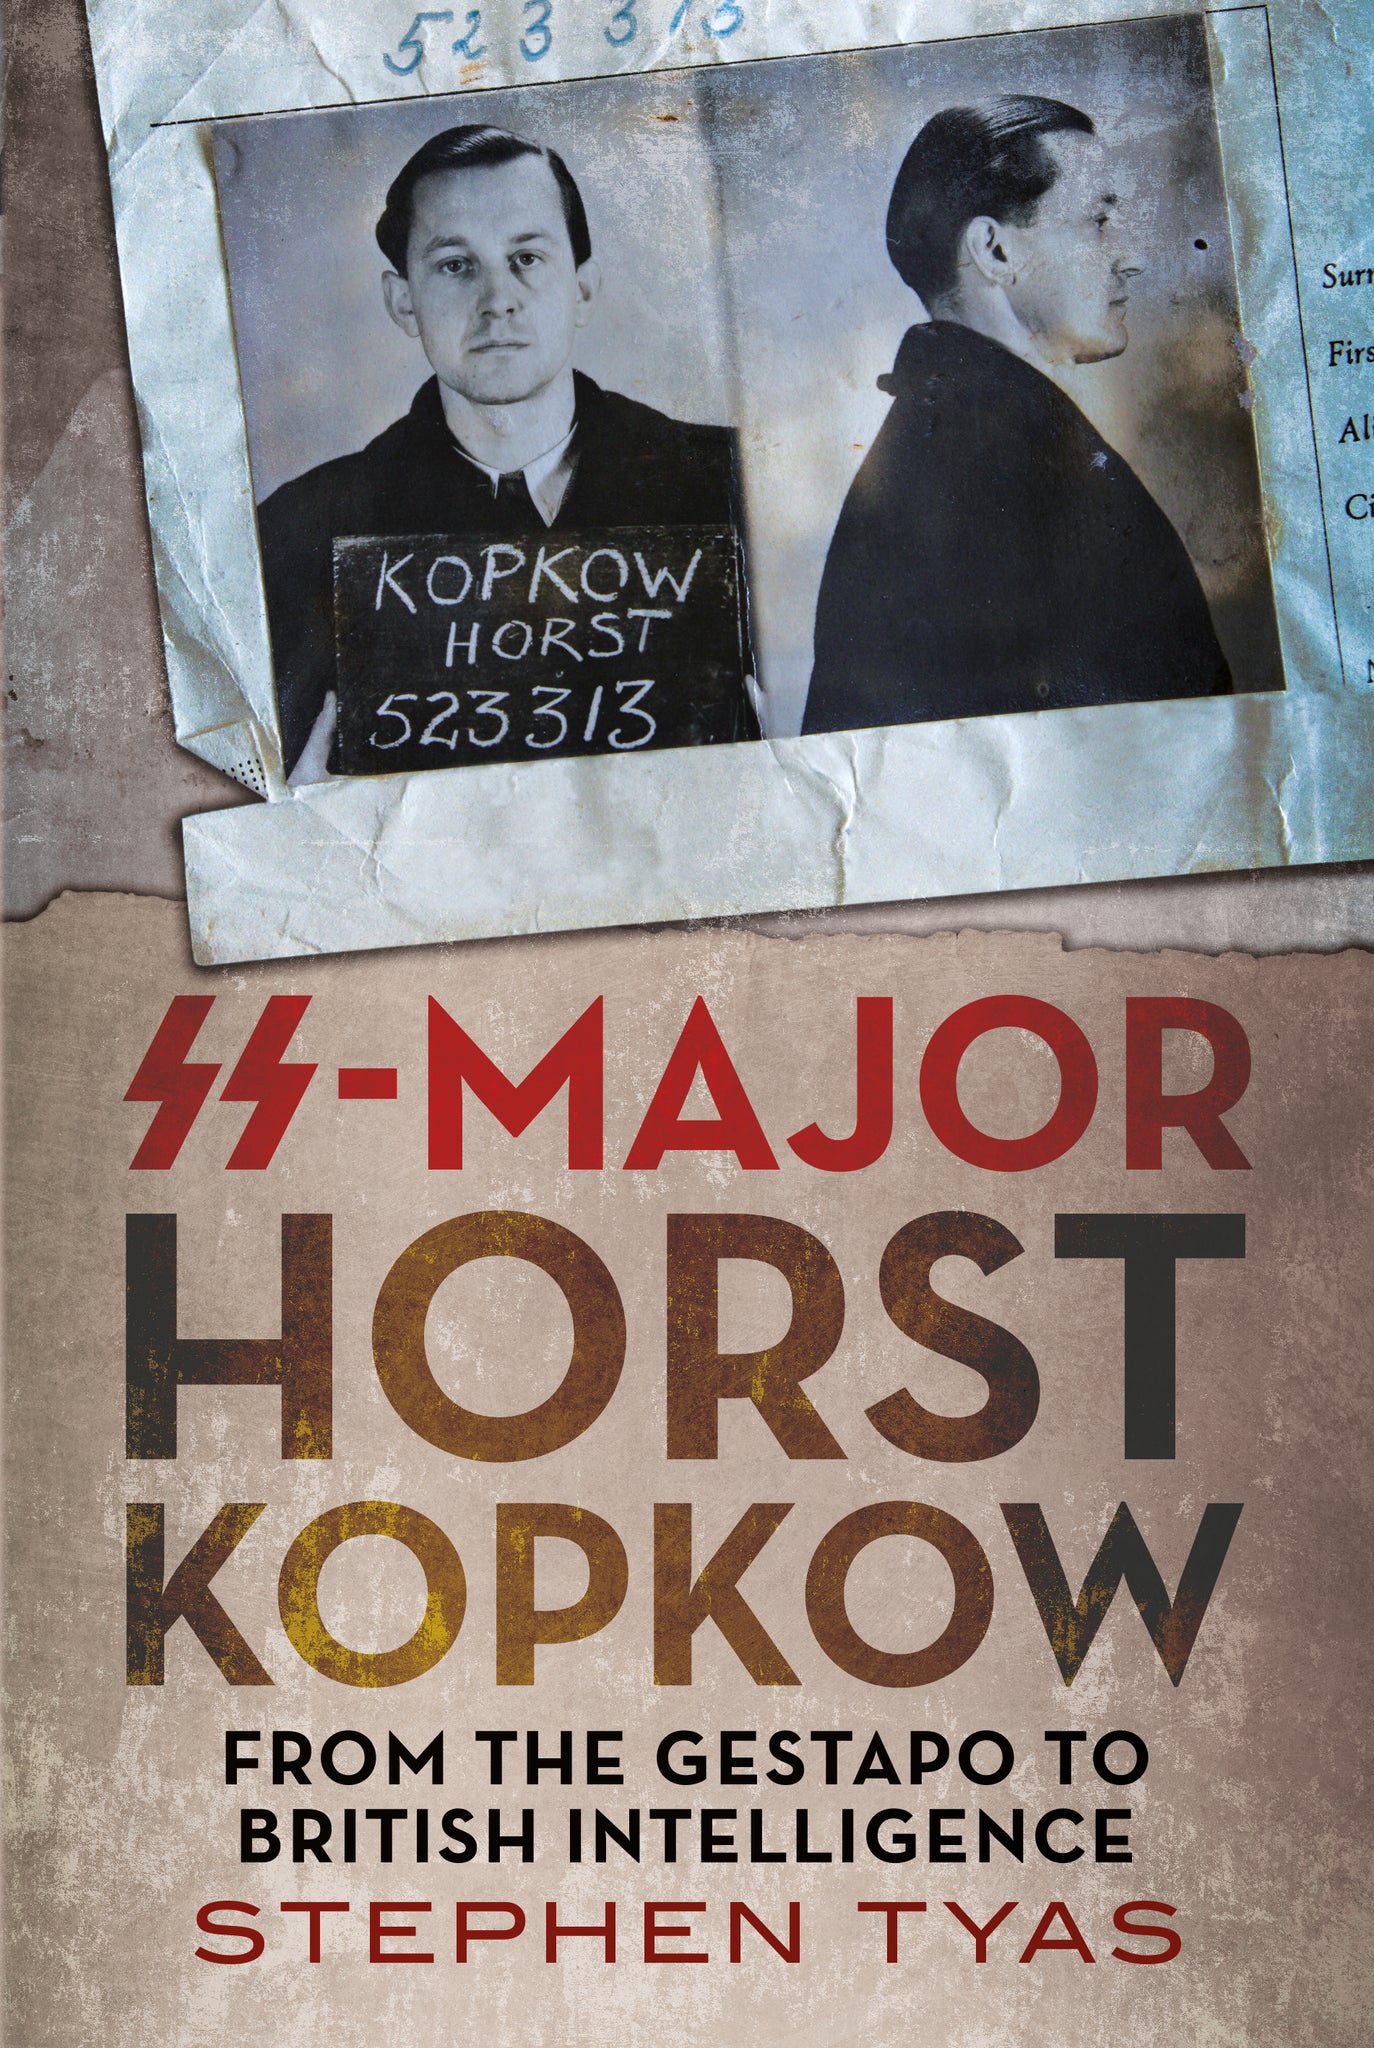 SS-Major Horst Kopkow: From the Gestapo to British Intelligence